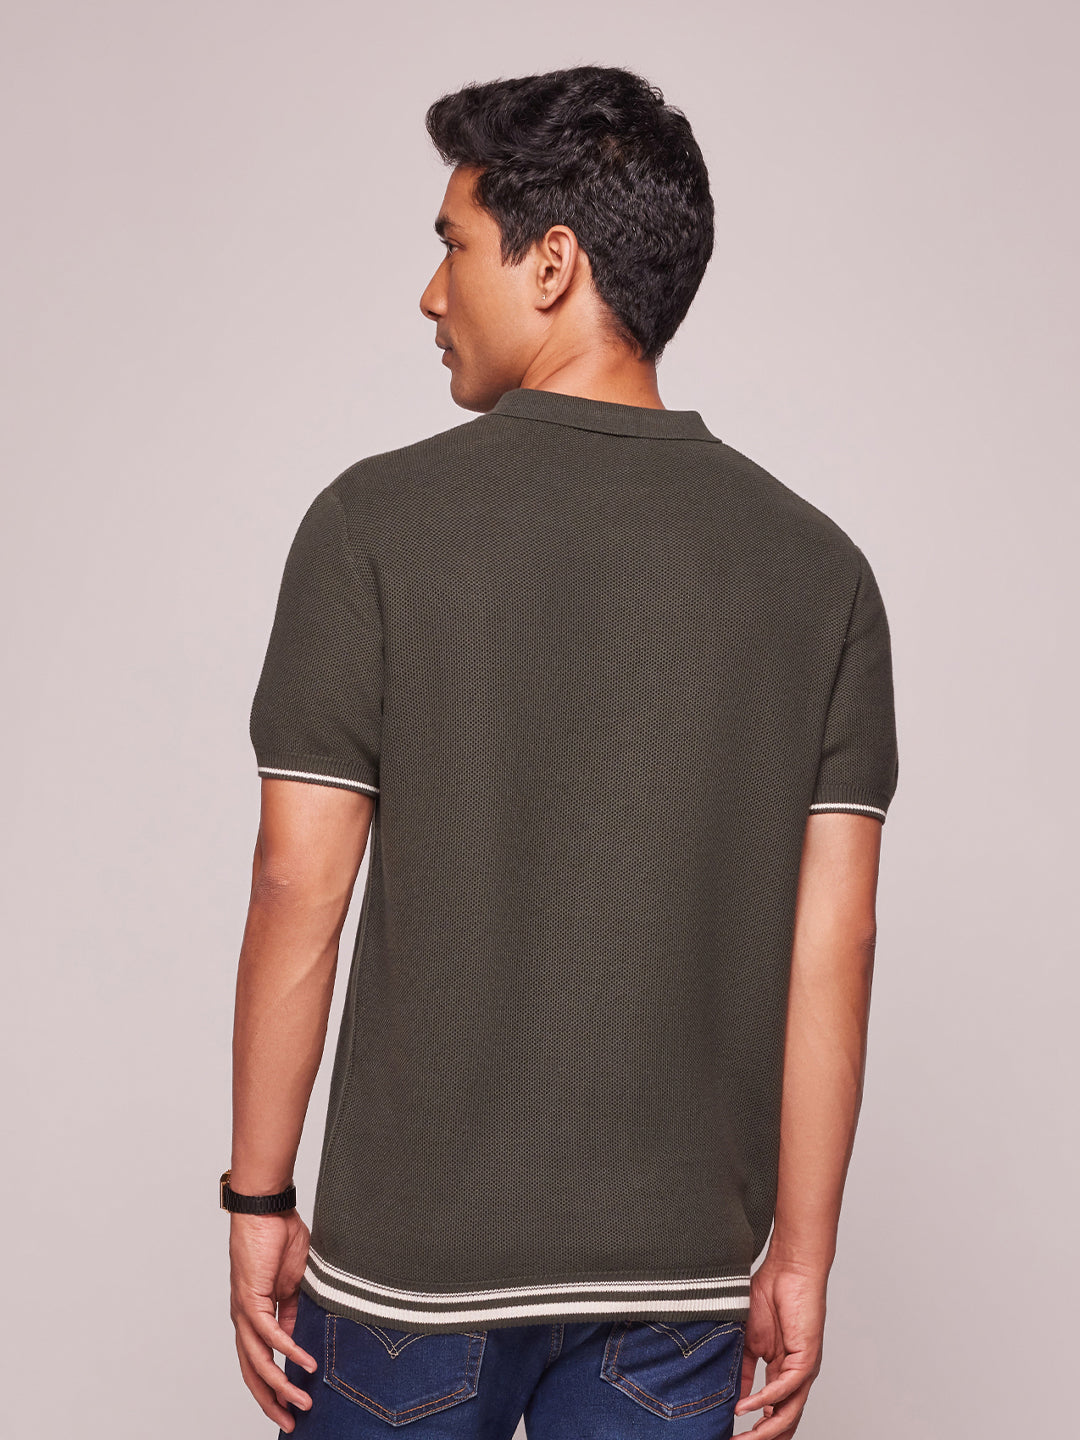 Bombay High Men's Seaweed Green Premium Cotton Knit Polo T-Shirt